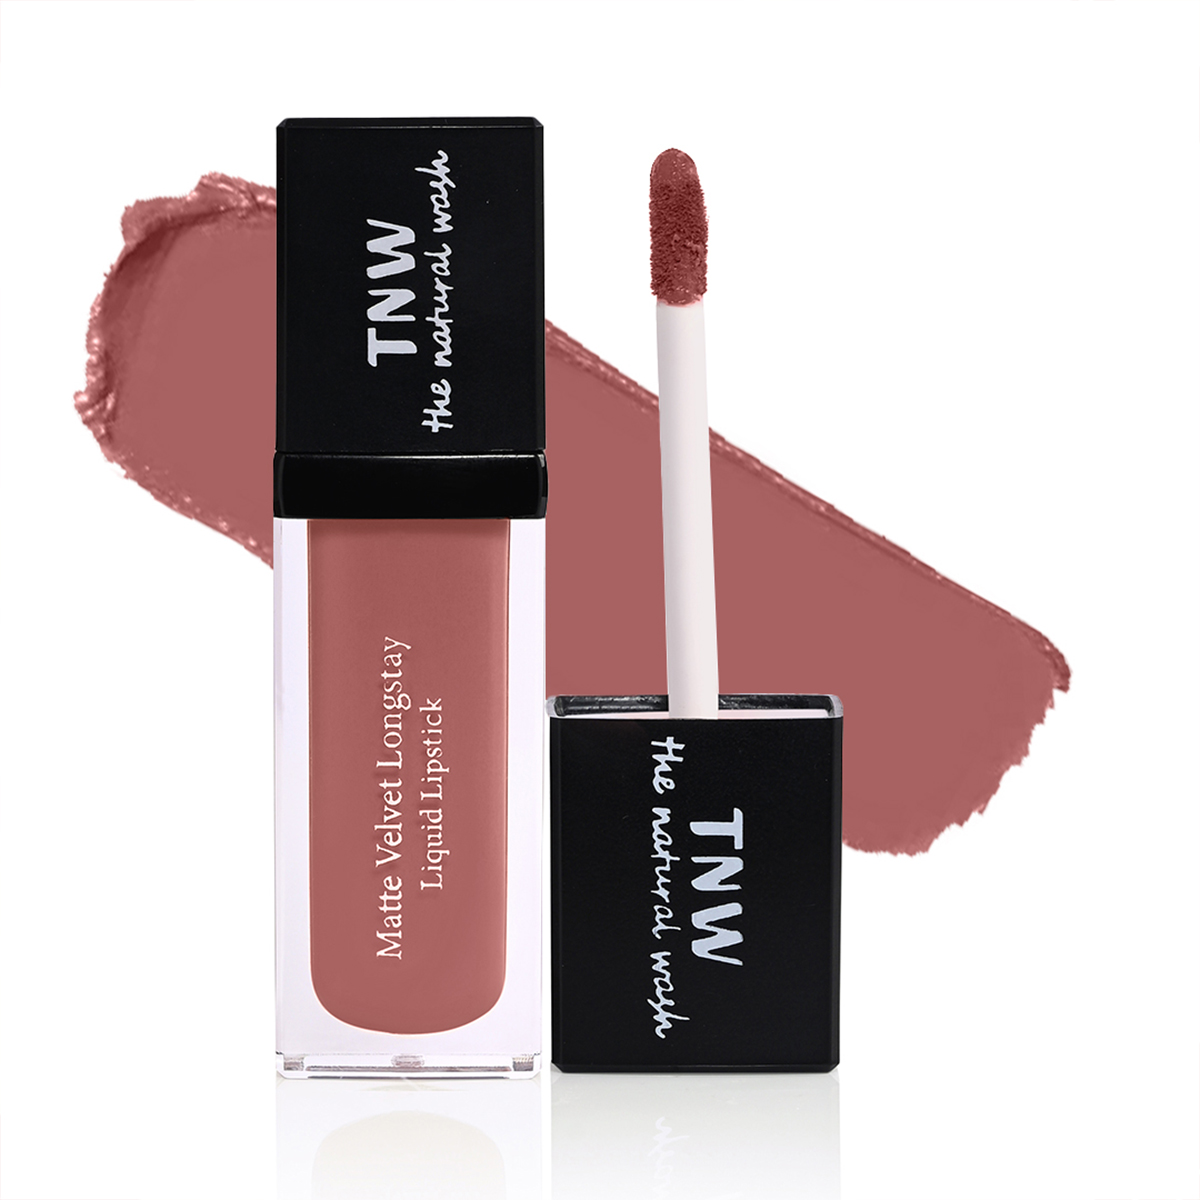 TNW - The Natural Wash Matte Velvet Longstay Liquid Lipstick, 03 - Magical Mauve - Mauvey Pink, 5ml